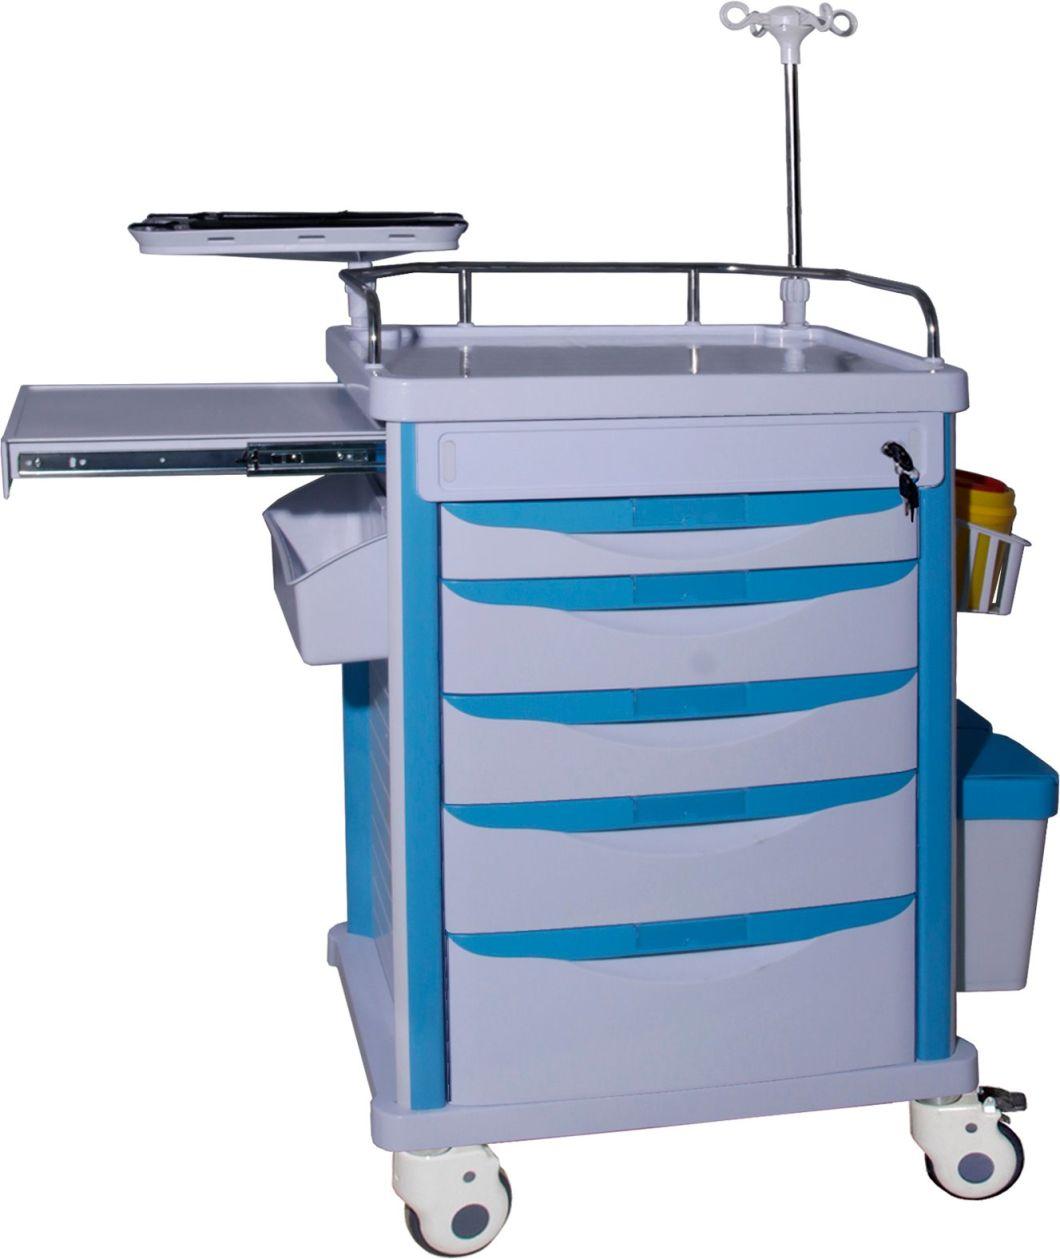 Mn-Ec002 Hospital ABS Medication Storage Trolley Medical Emergency Cart for Hospital